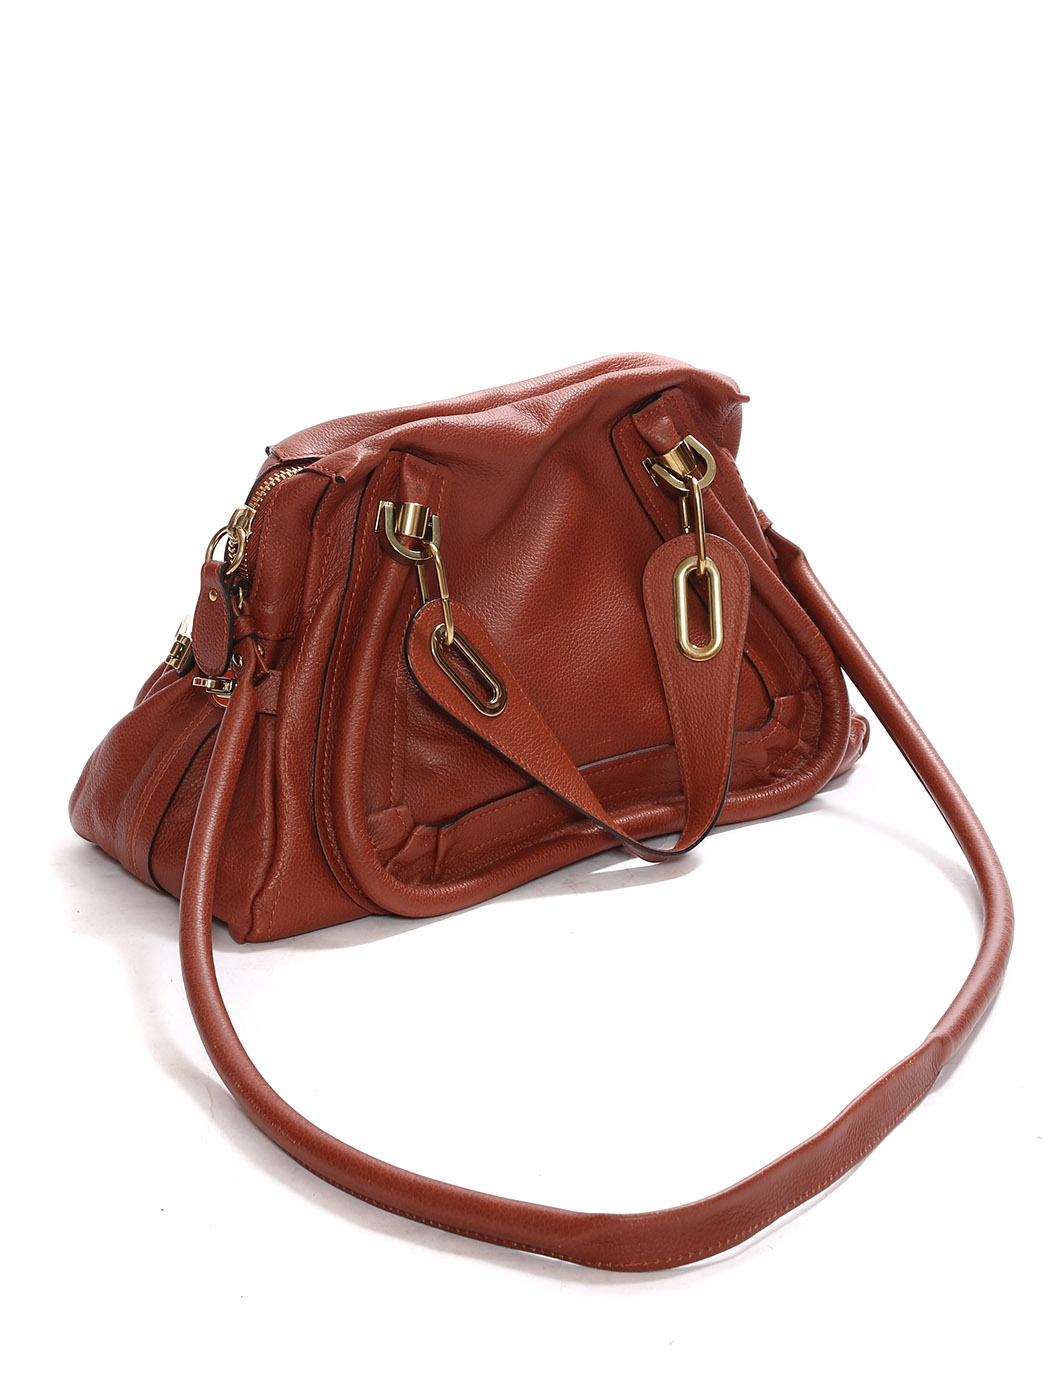 Louise Paris - CHLOE Cognac tan brown grained leather Paraty medium leather cross body bag ...